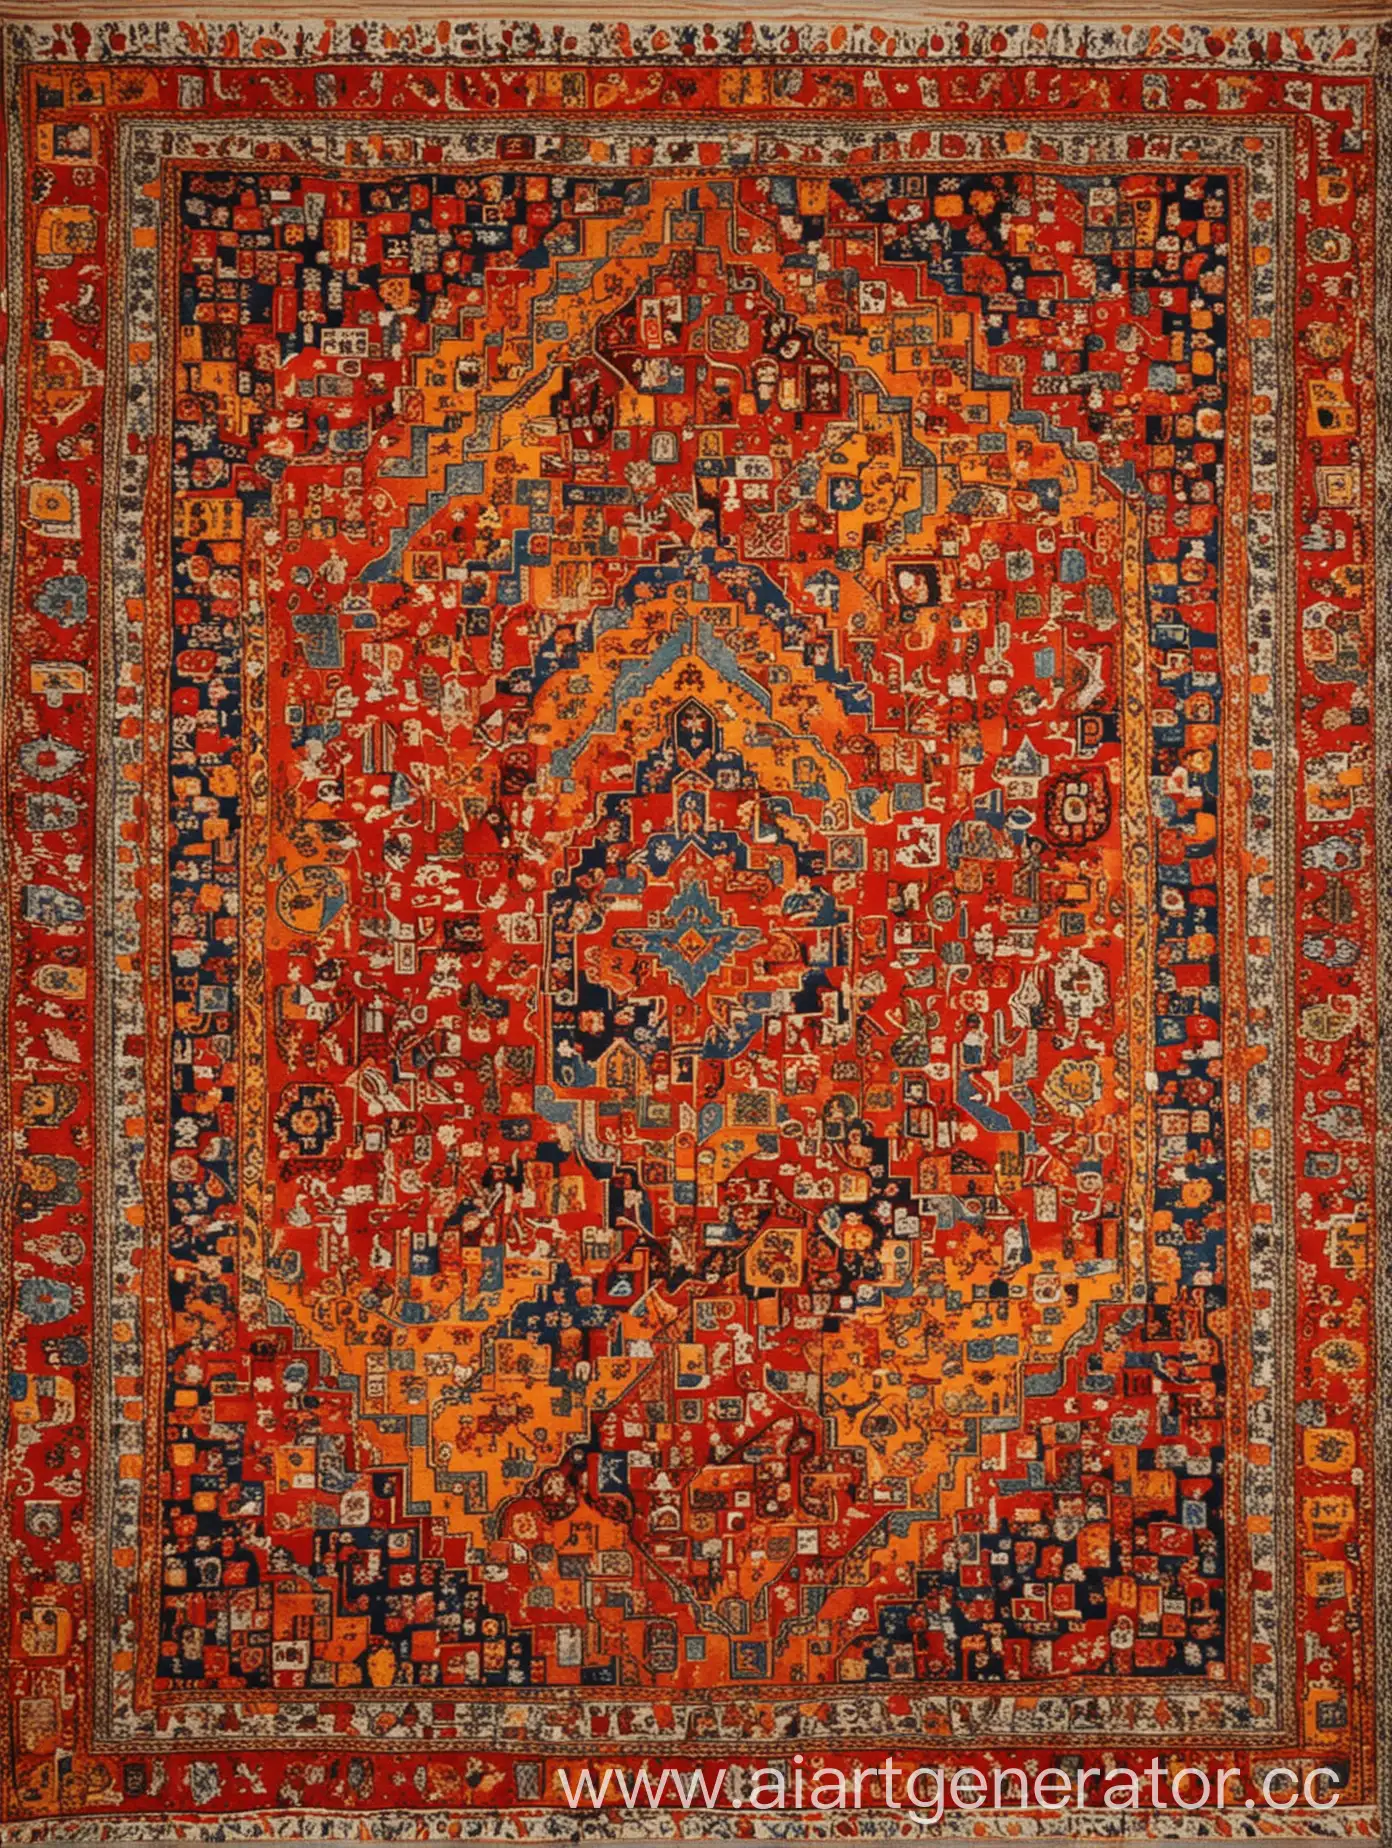 Vibrant-Armenian-Carpet-Weaving-Mastering-Red-Yellow-and-Orange-Hues